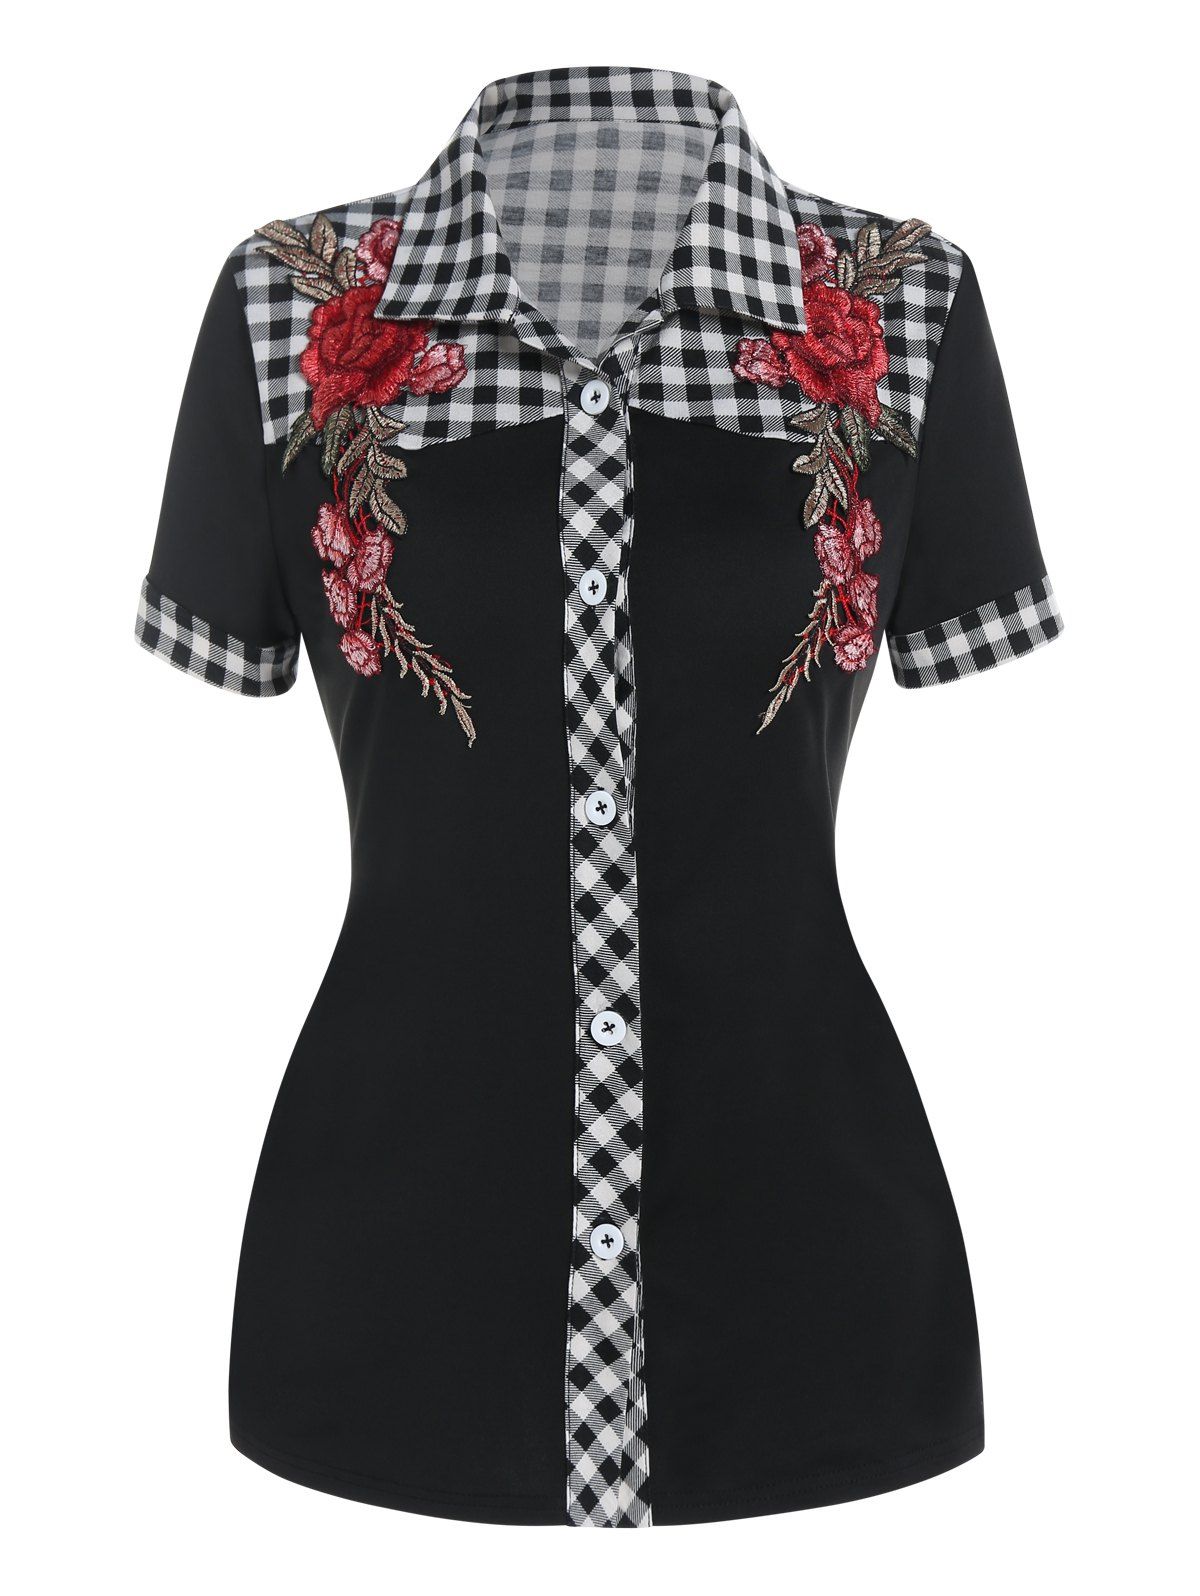 Women Vintage Shirt Plaid Embroidery Rose Pattern Shirt Button-up Vacation Shirt Clothing M Black